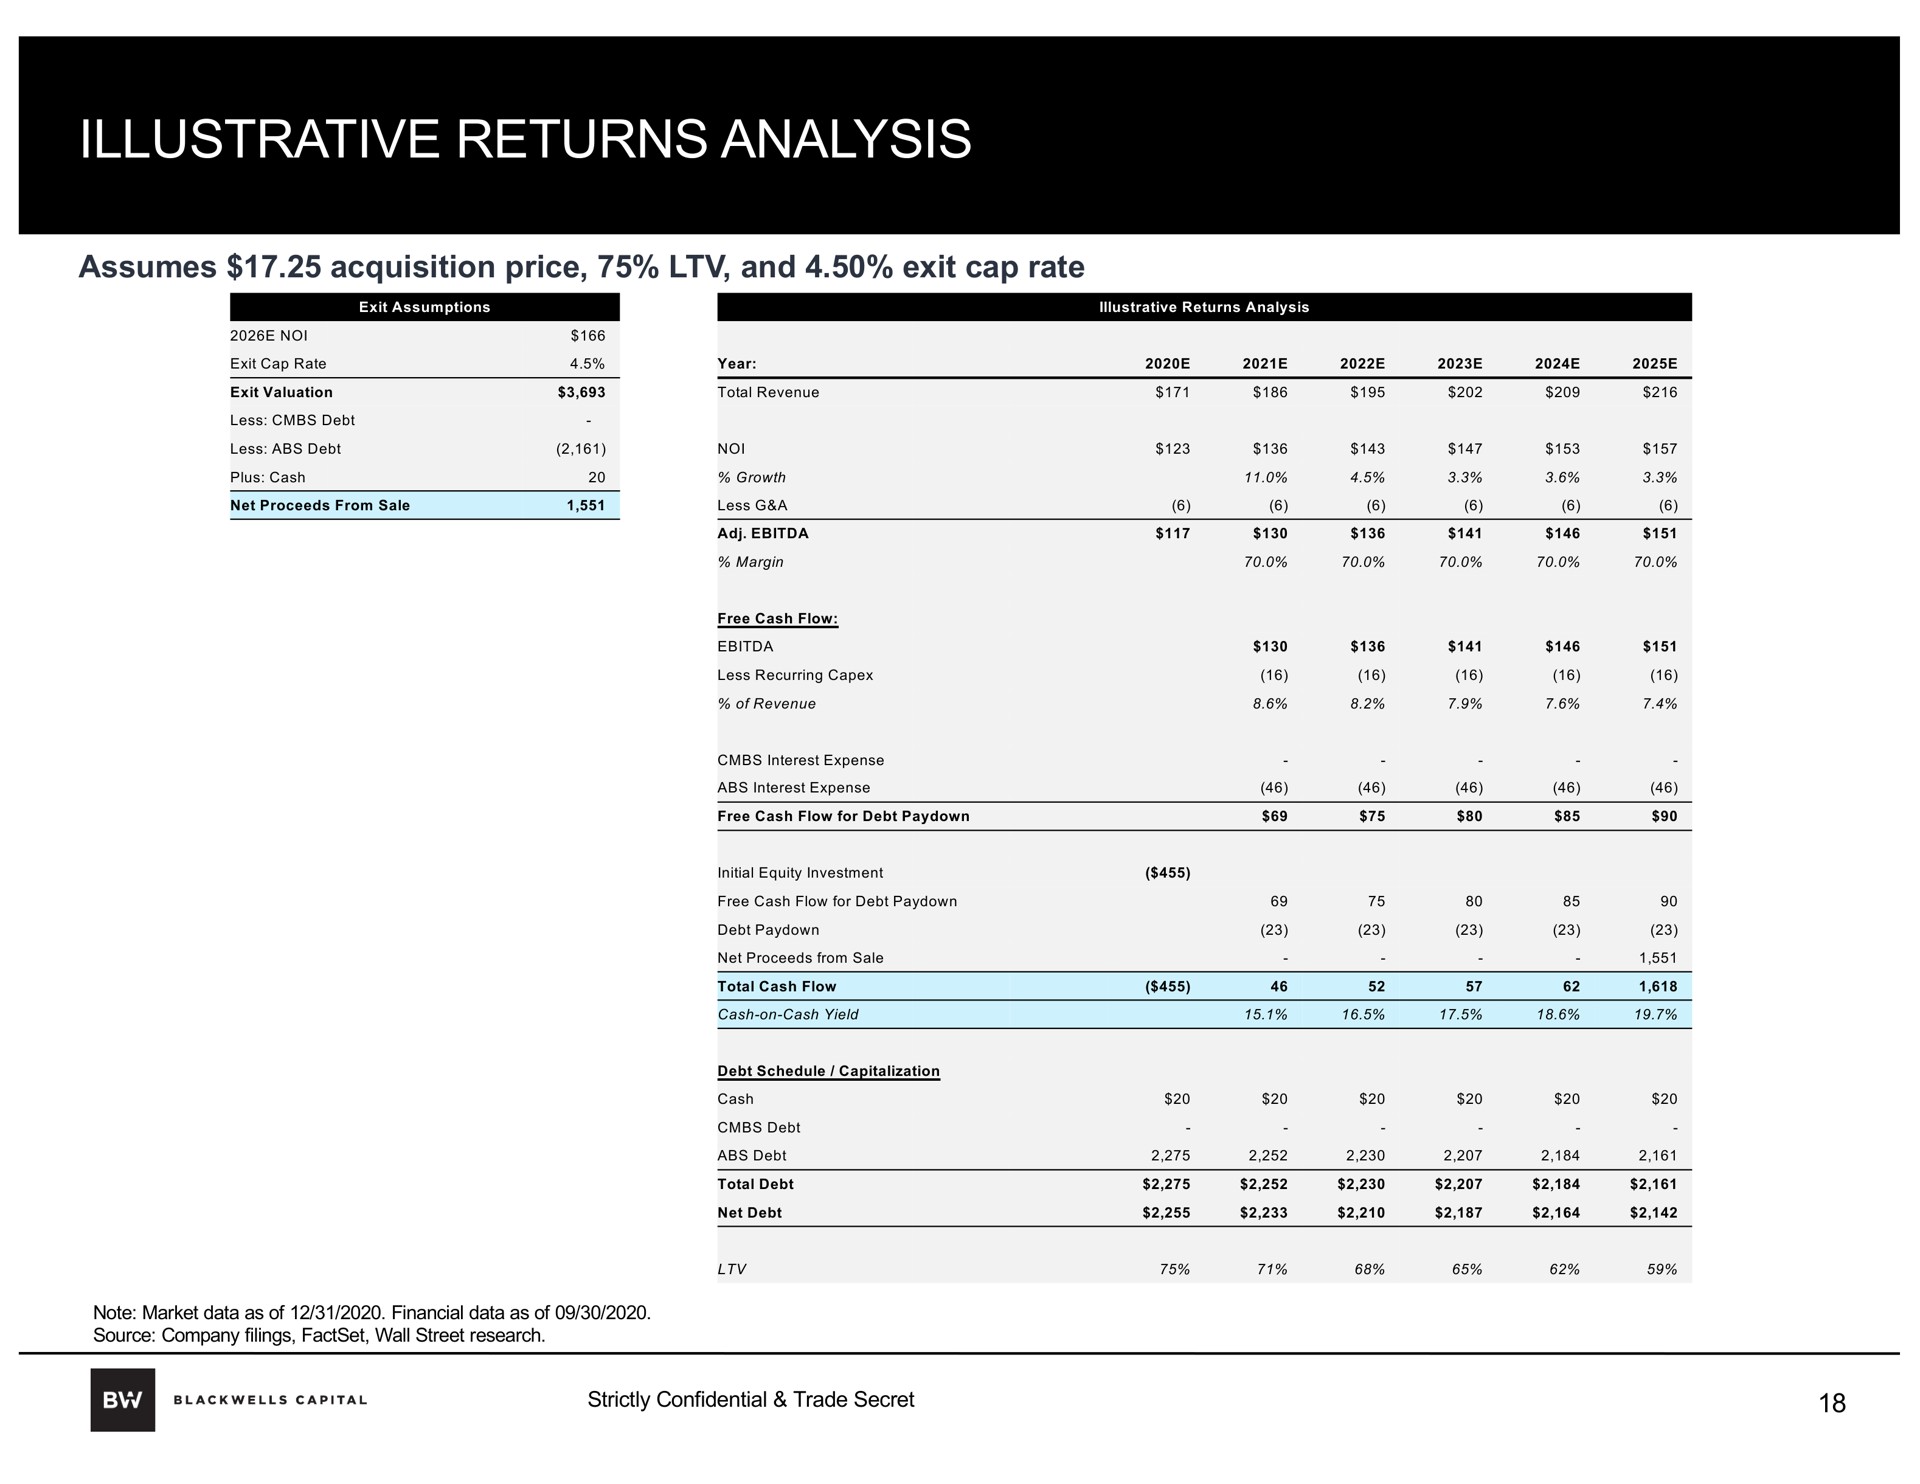 illustrative returns analysis | Blackwells Capital